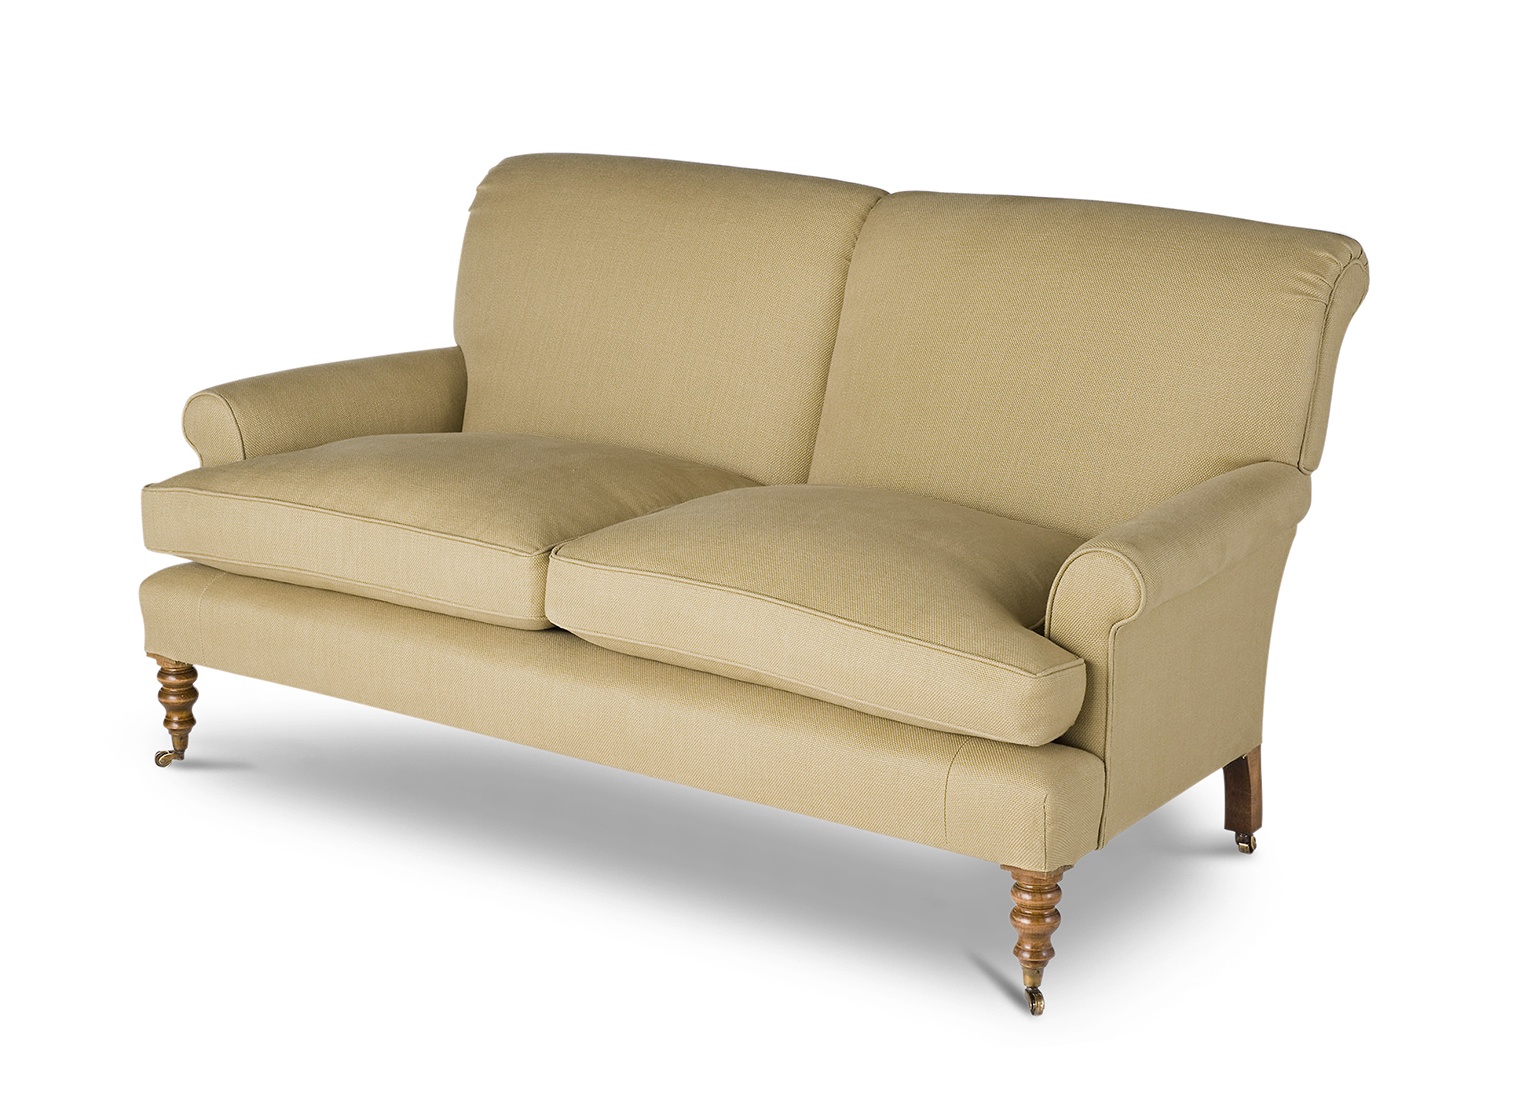 Hamilton 2.5 seater sofa in Donegal linen - Laurel - Beaumont & Fletcher